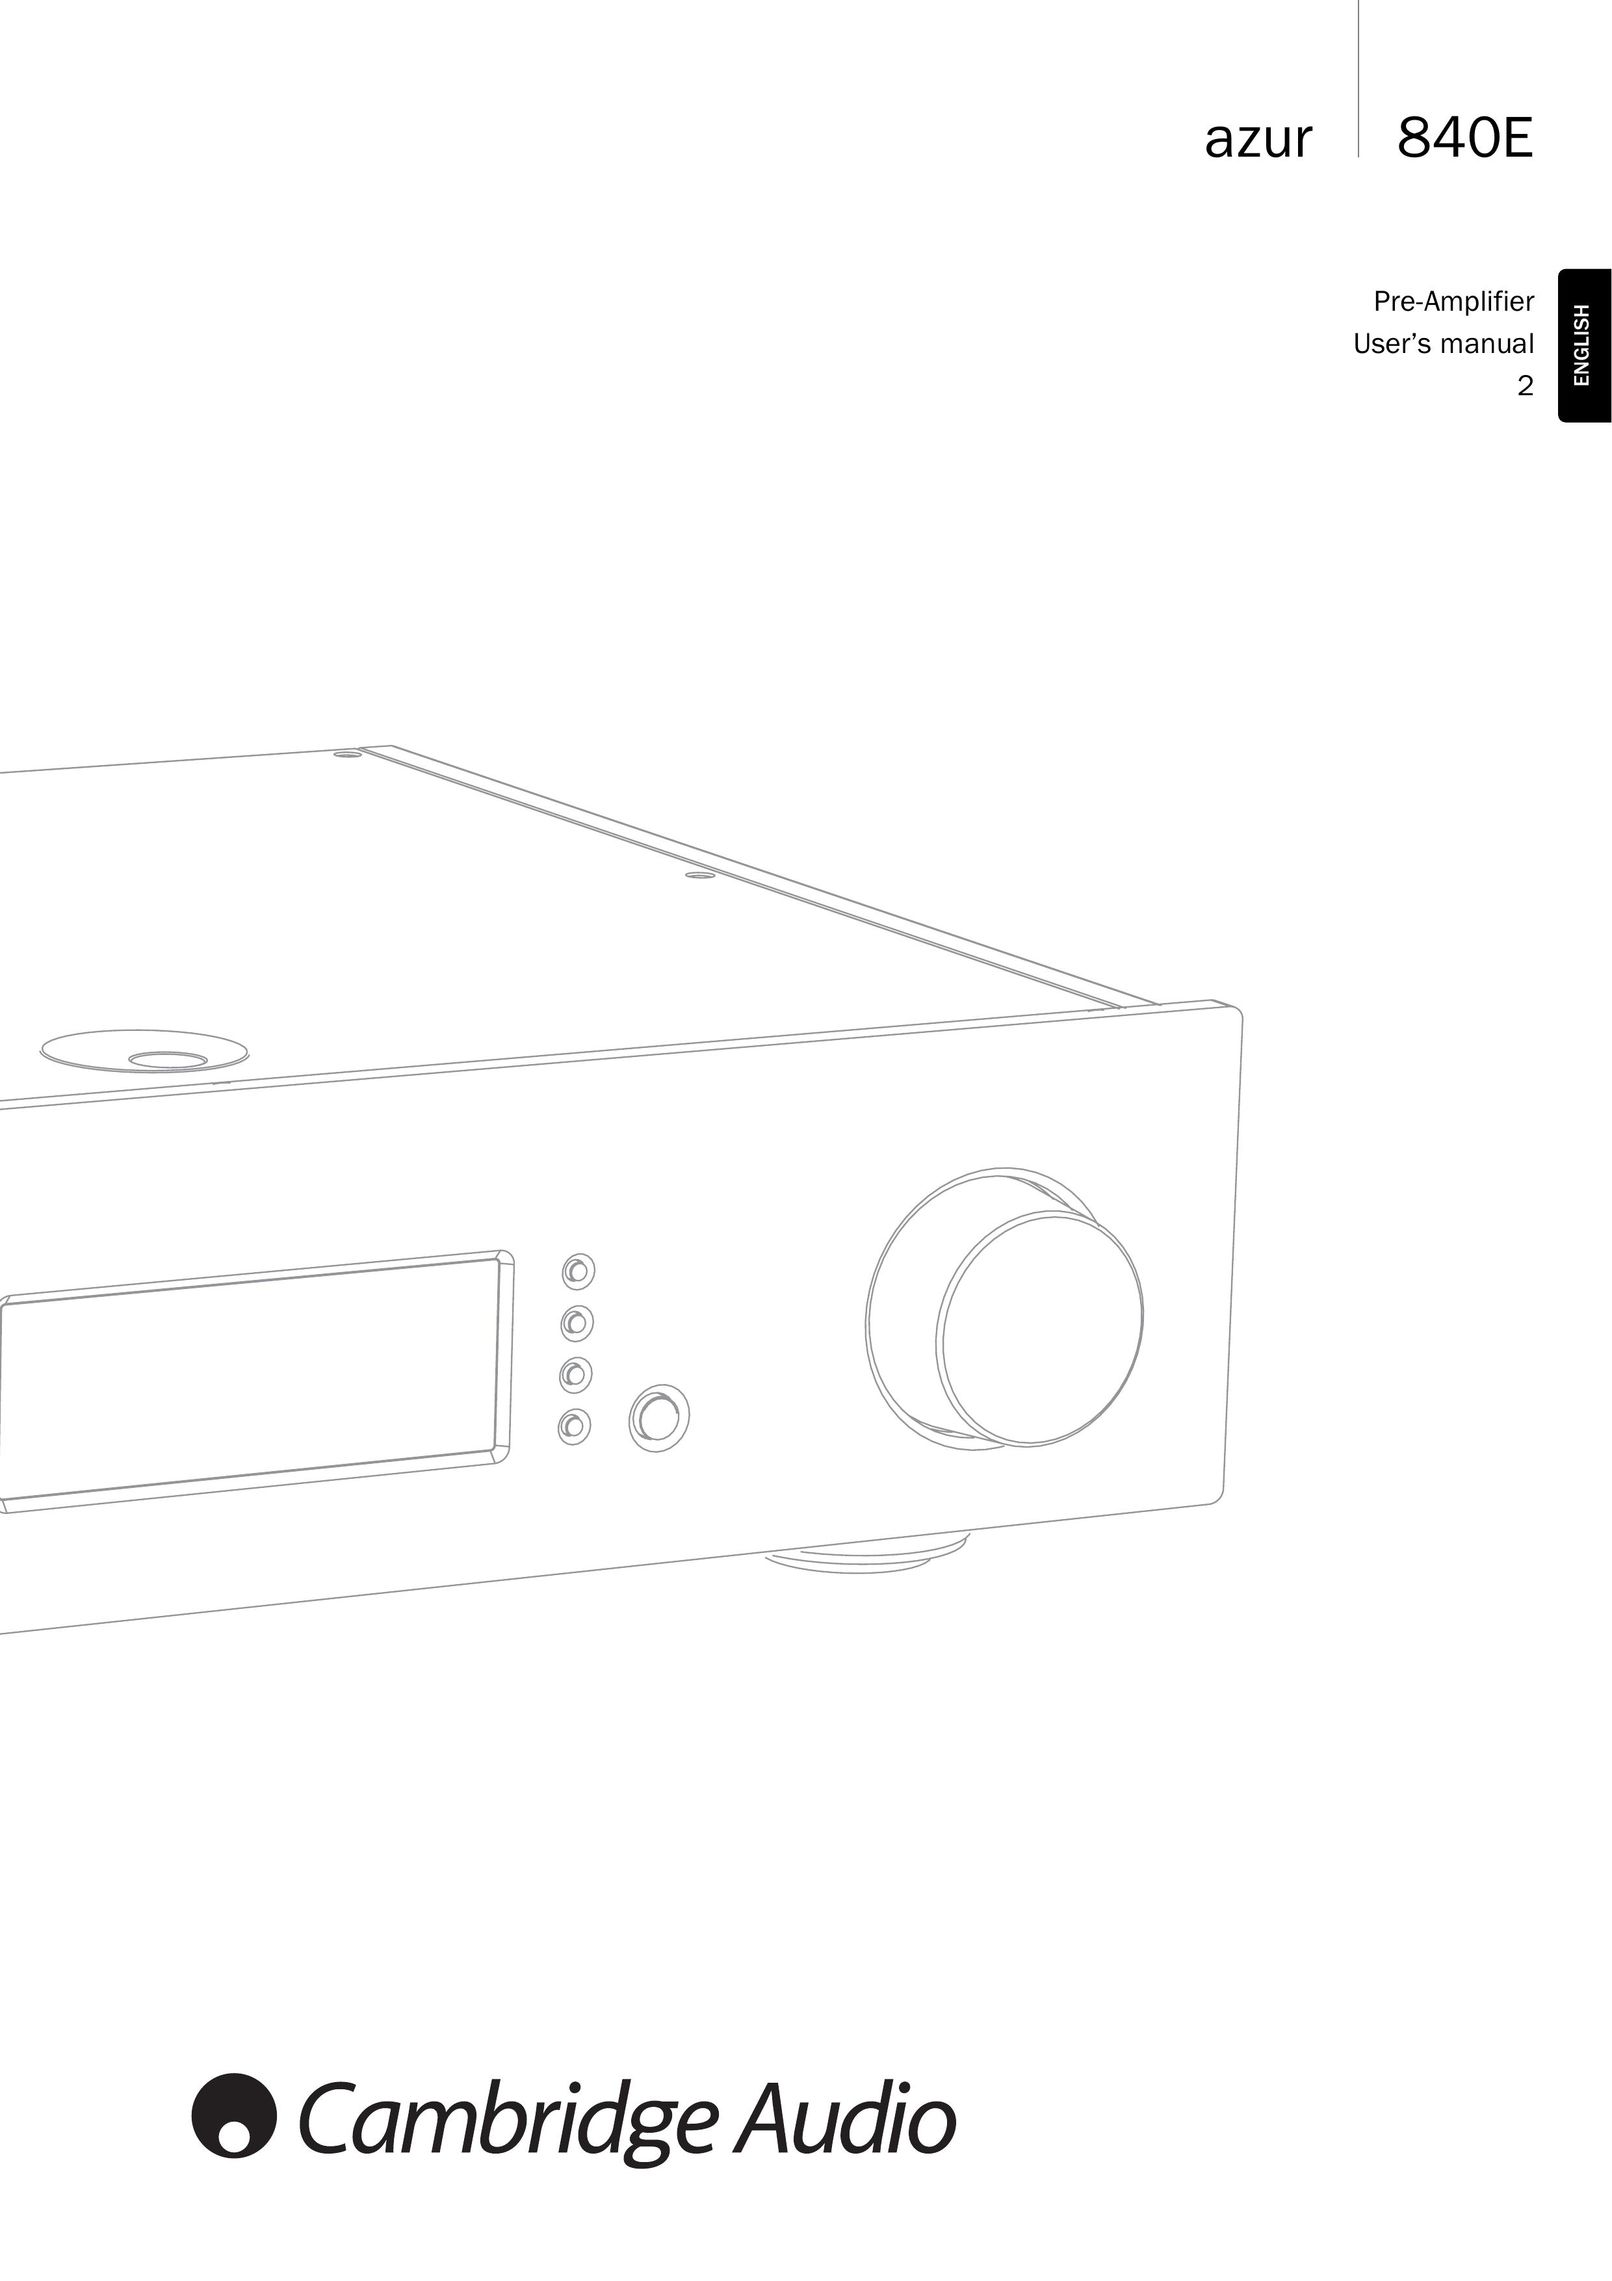 Cambridge Audio Azur 840EW Stereo Amplifier User Manual